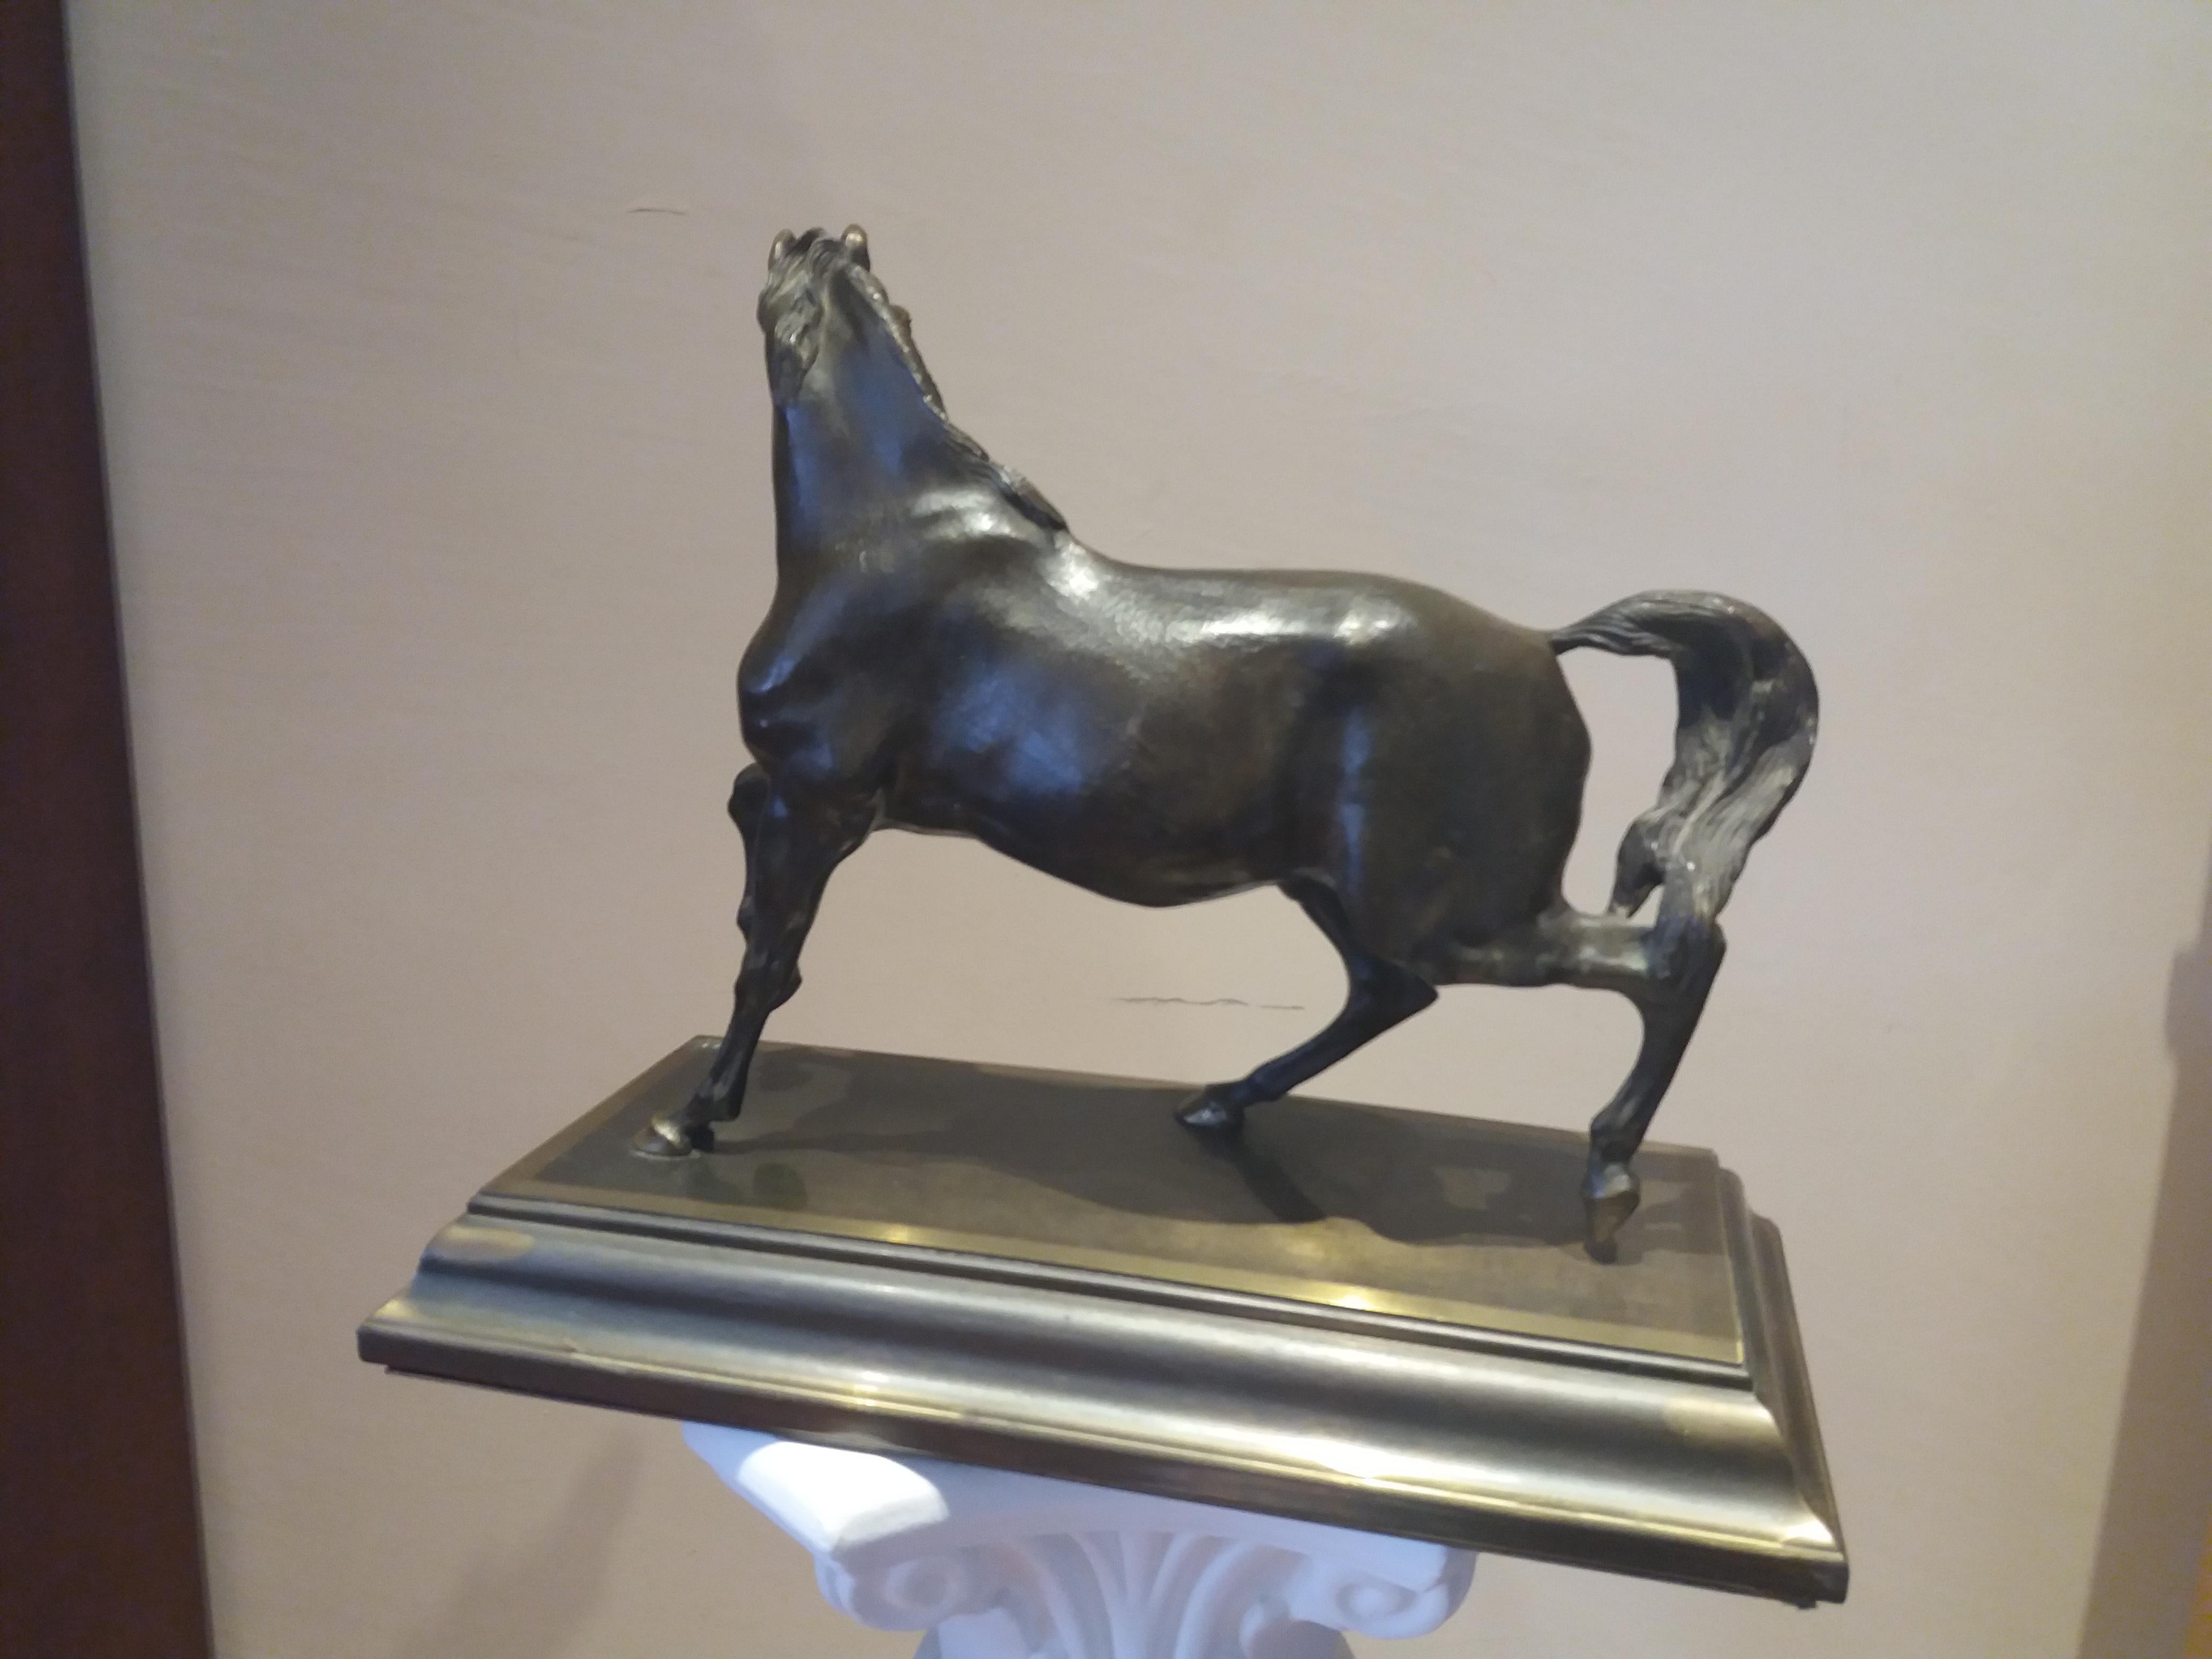  horse. 19th century bronze sculpture - Gold Figurative Sculpture by Unknown